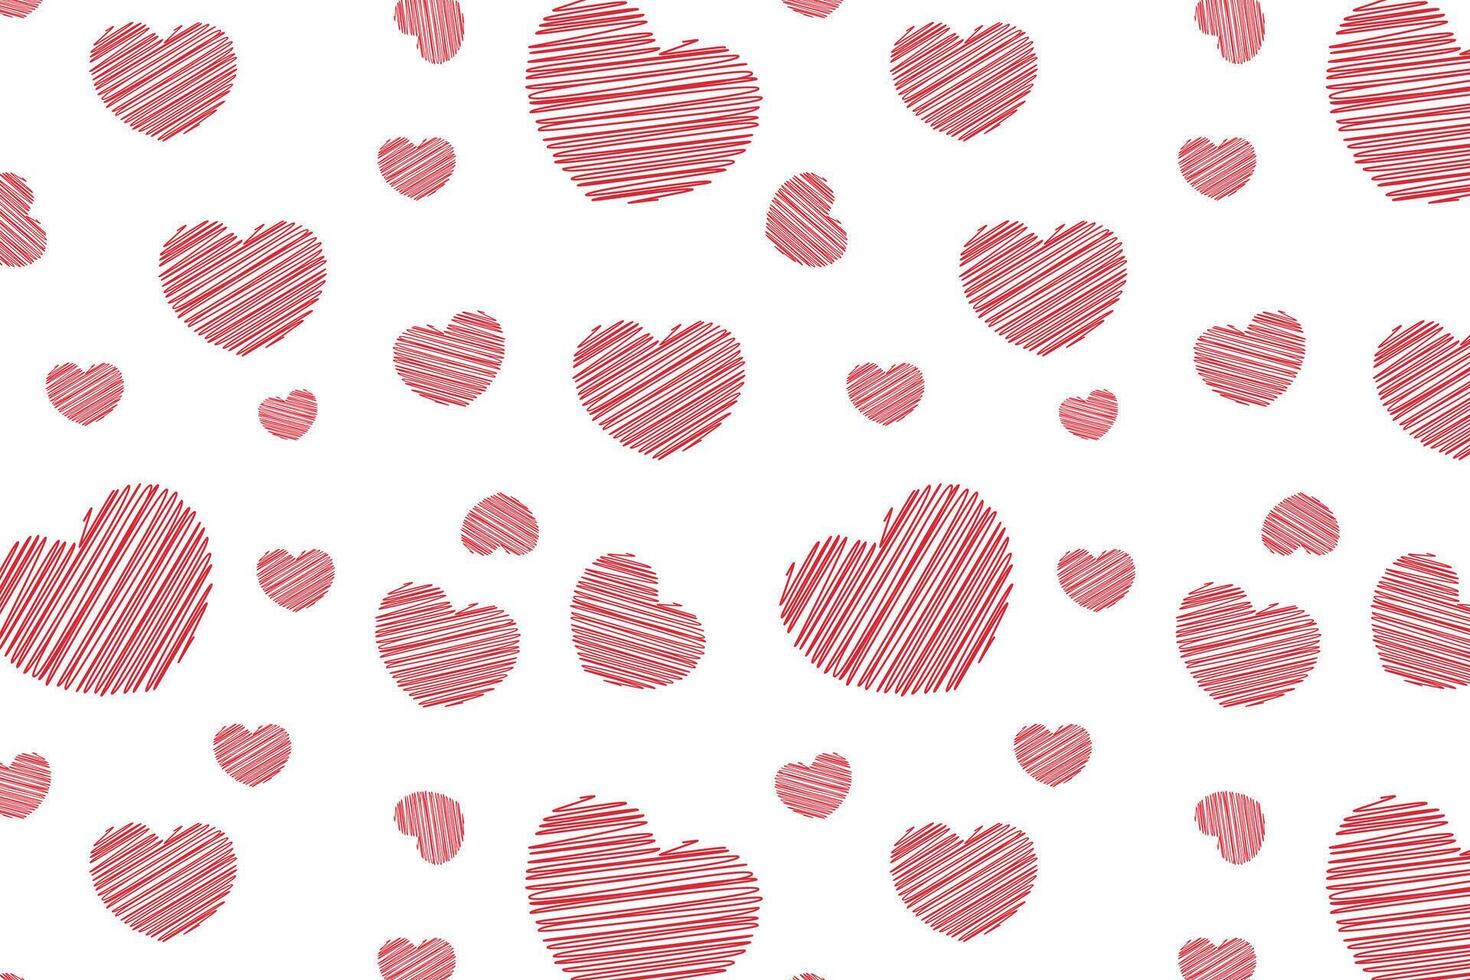 Vektor Liebe Herz Muster, Vektor Hand gezeichnet Valentinstag Tag Muster, Valentinstag Tag Hintergrund.